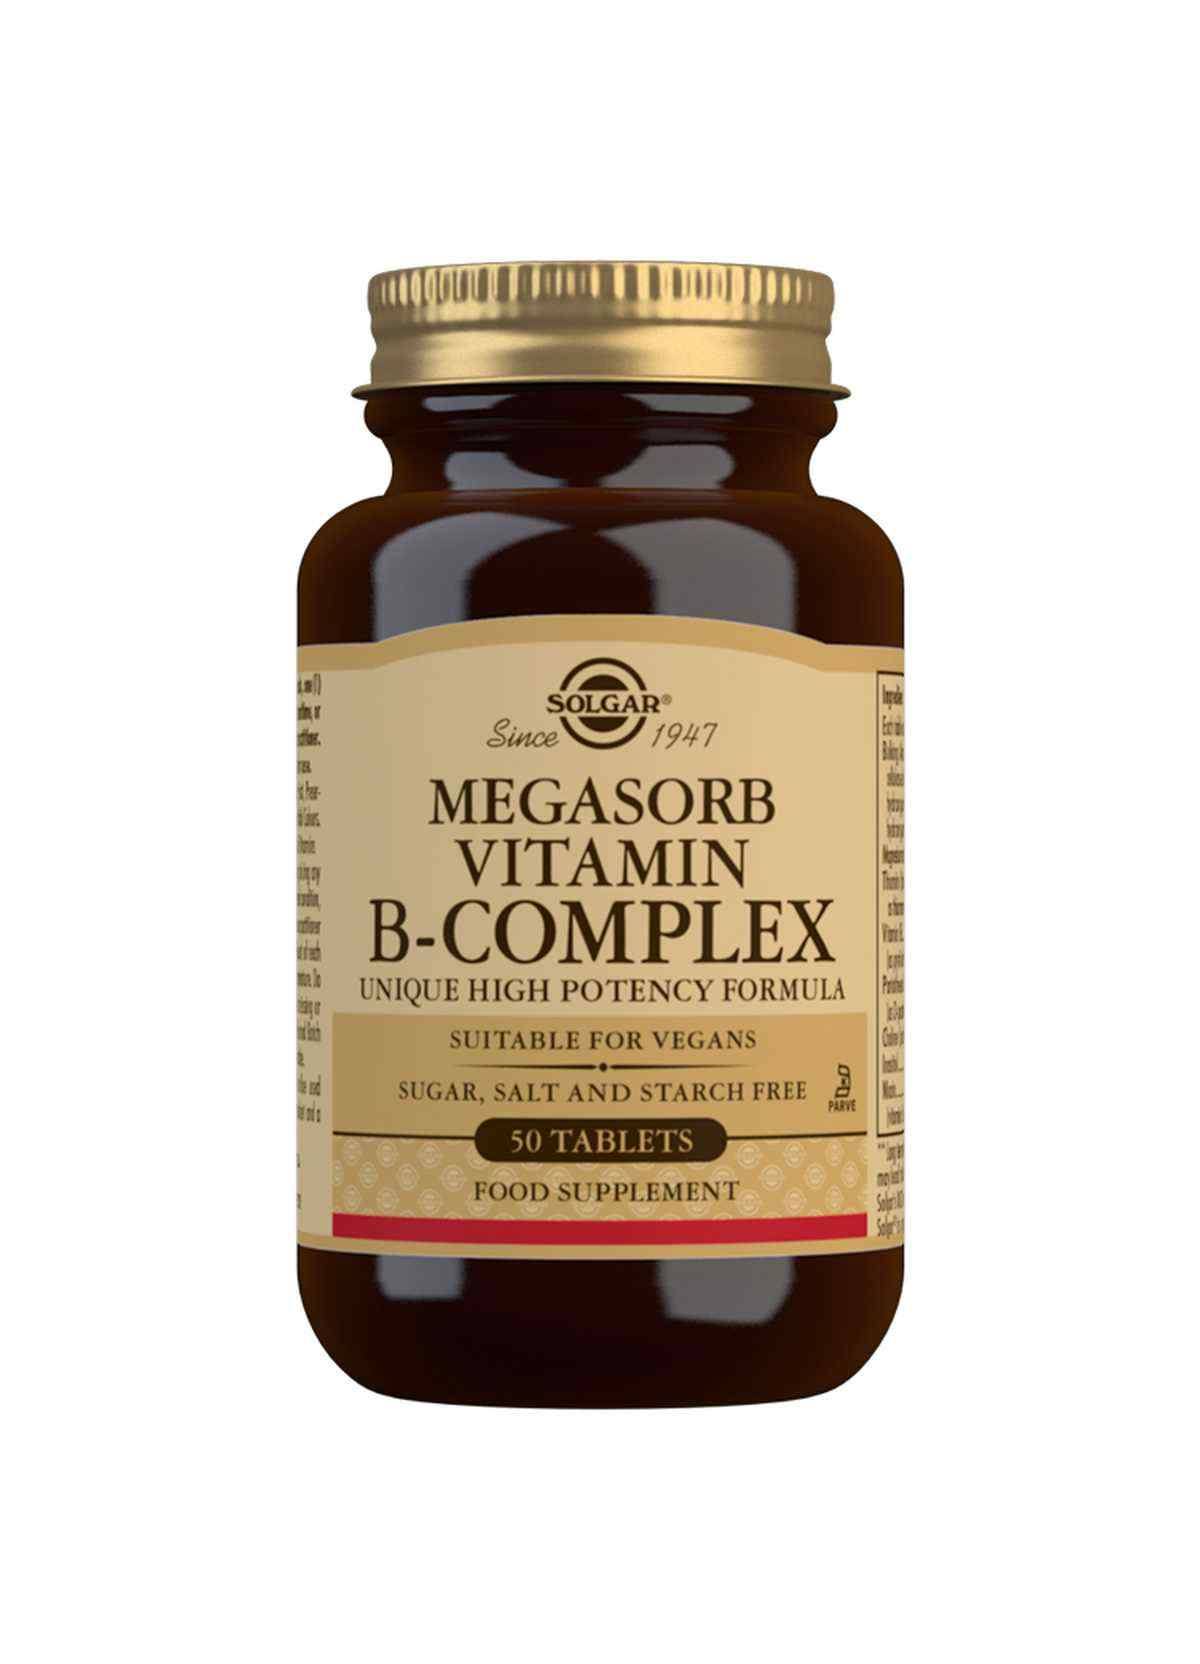 Solgar Megasorb Vitamin B-Complex - 50 Tablets